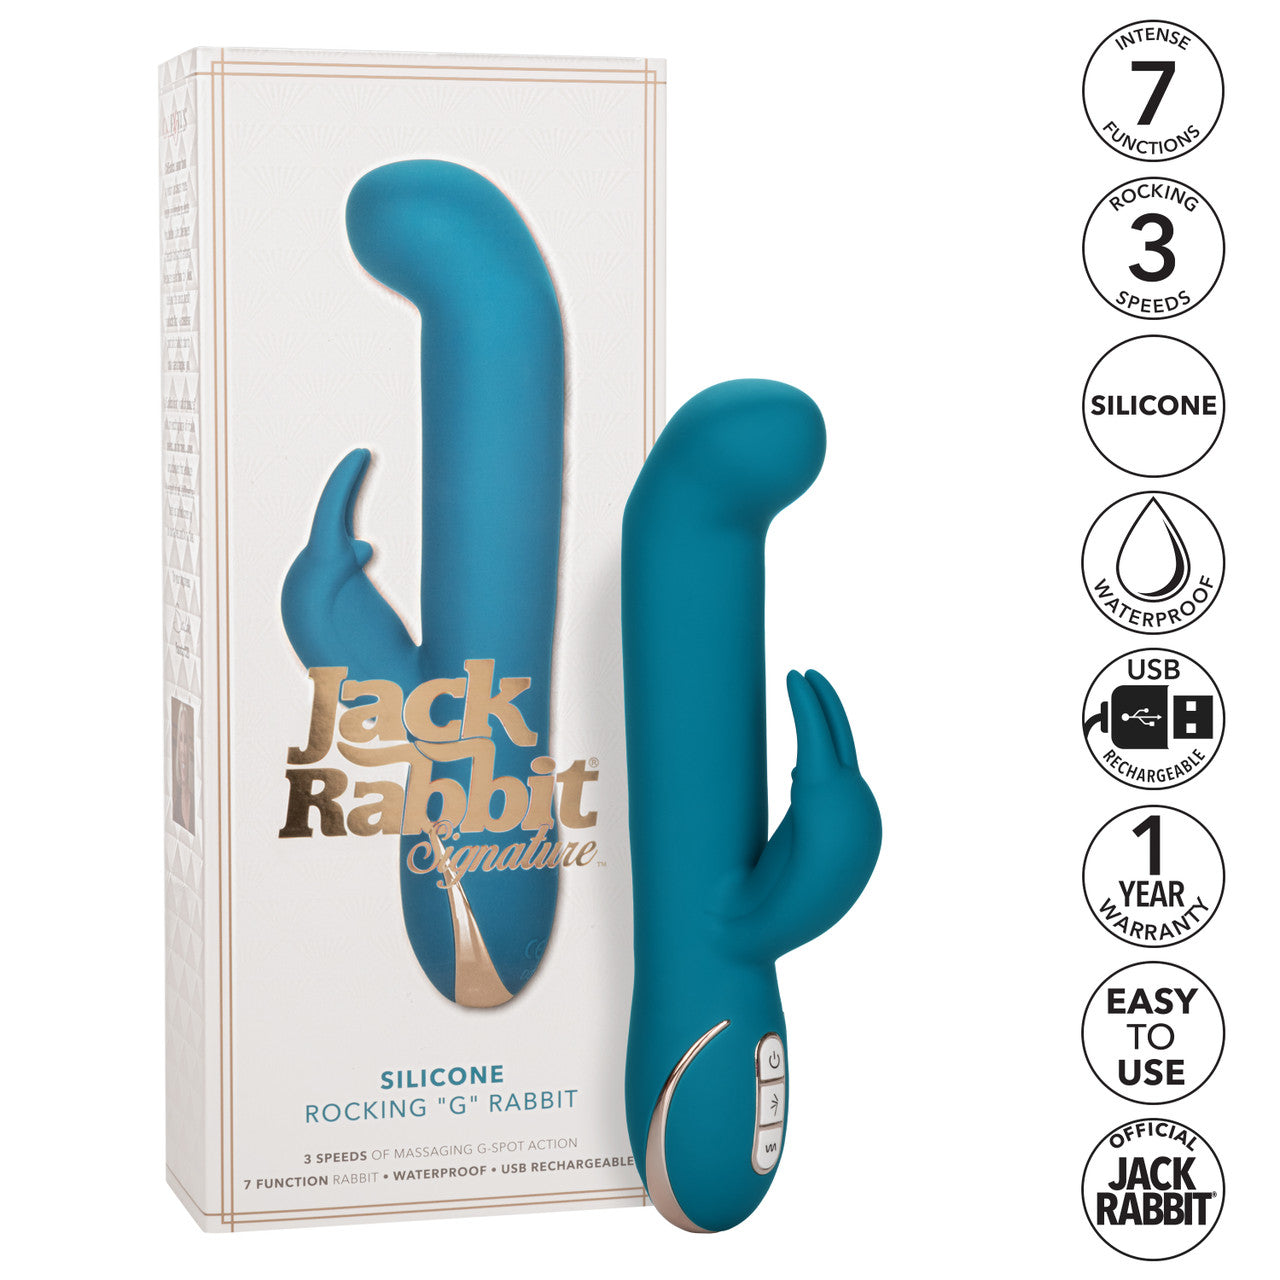 Calexotics Jack Rabbit® Signature Silicone Rocking "G” Rabbit